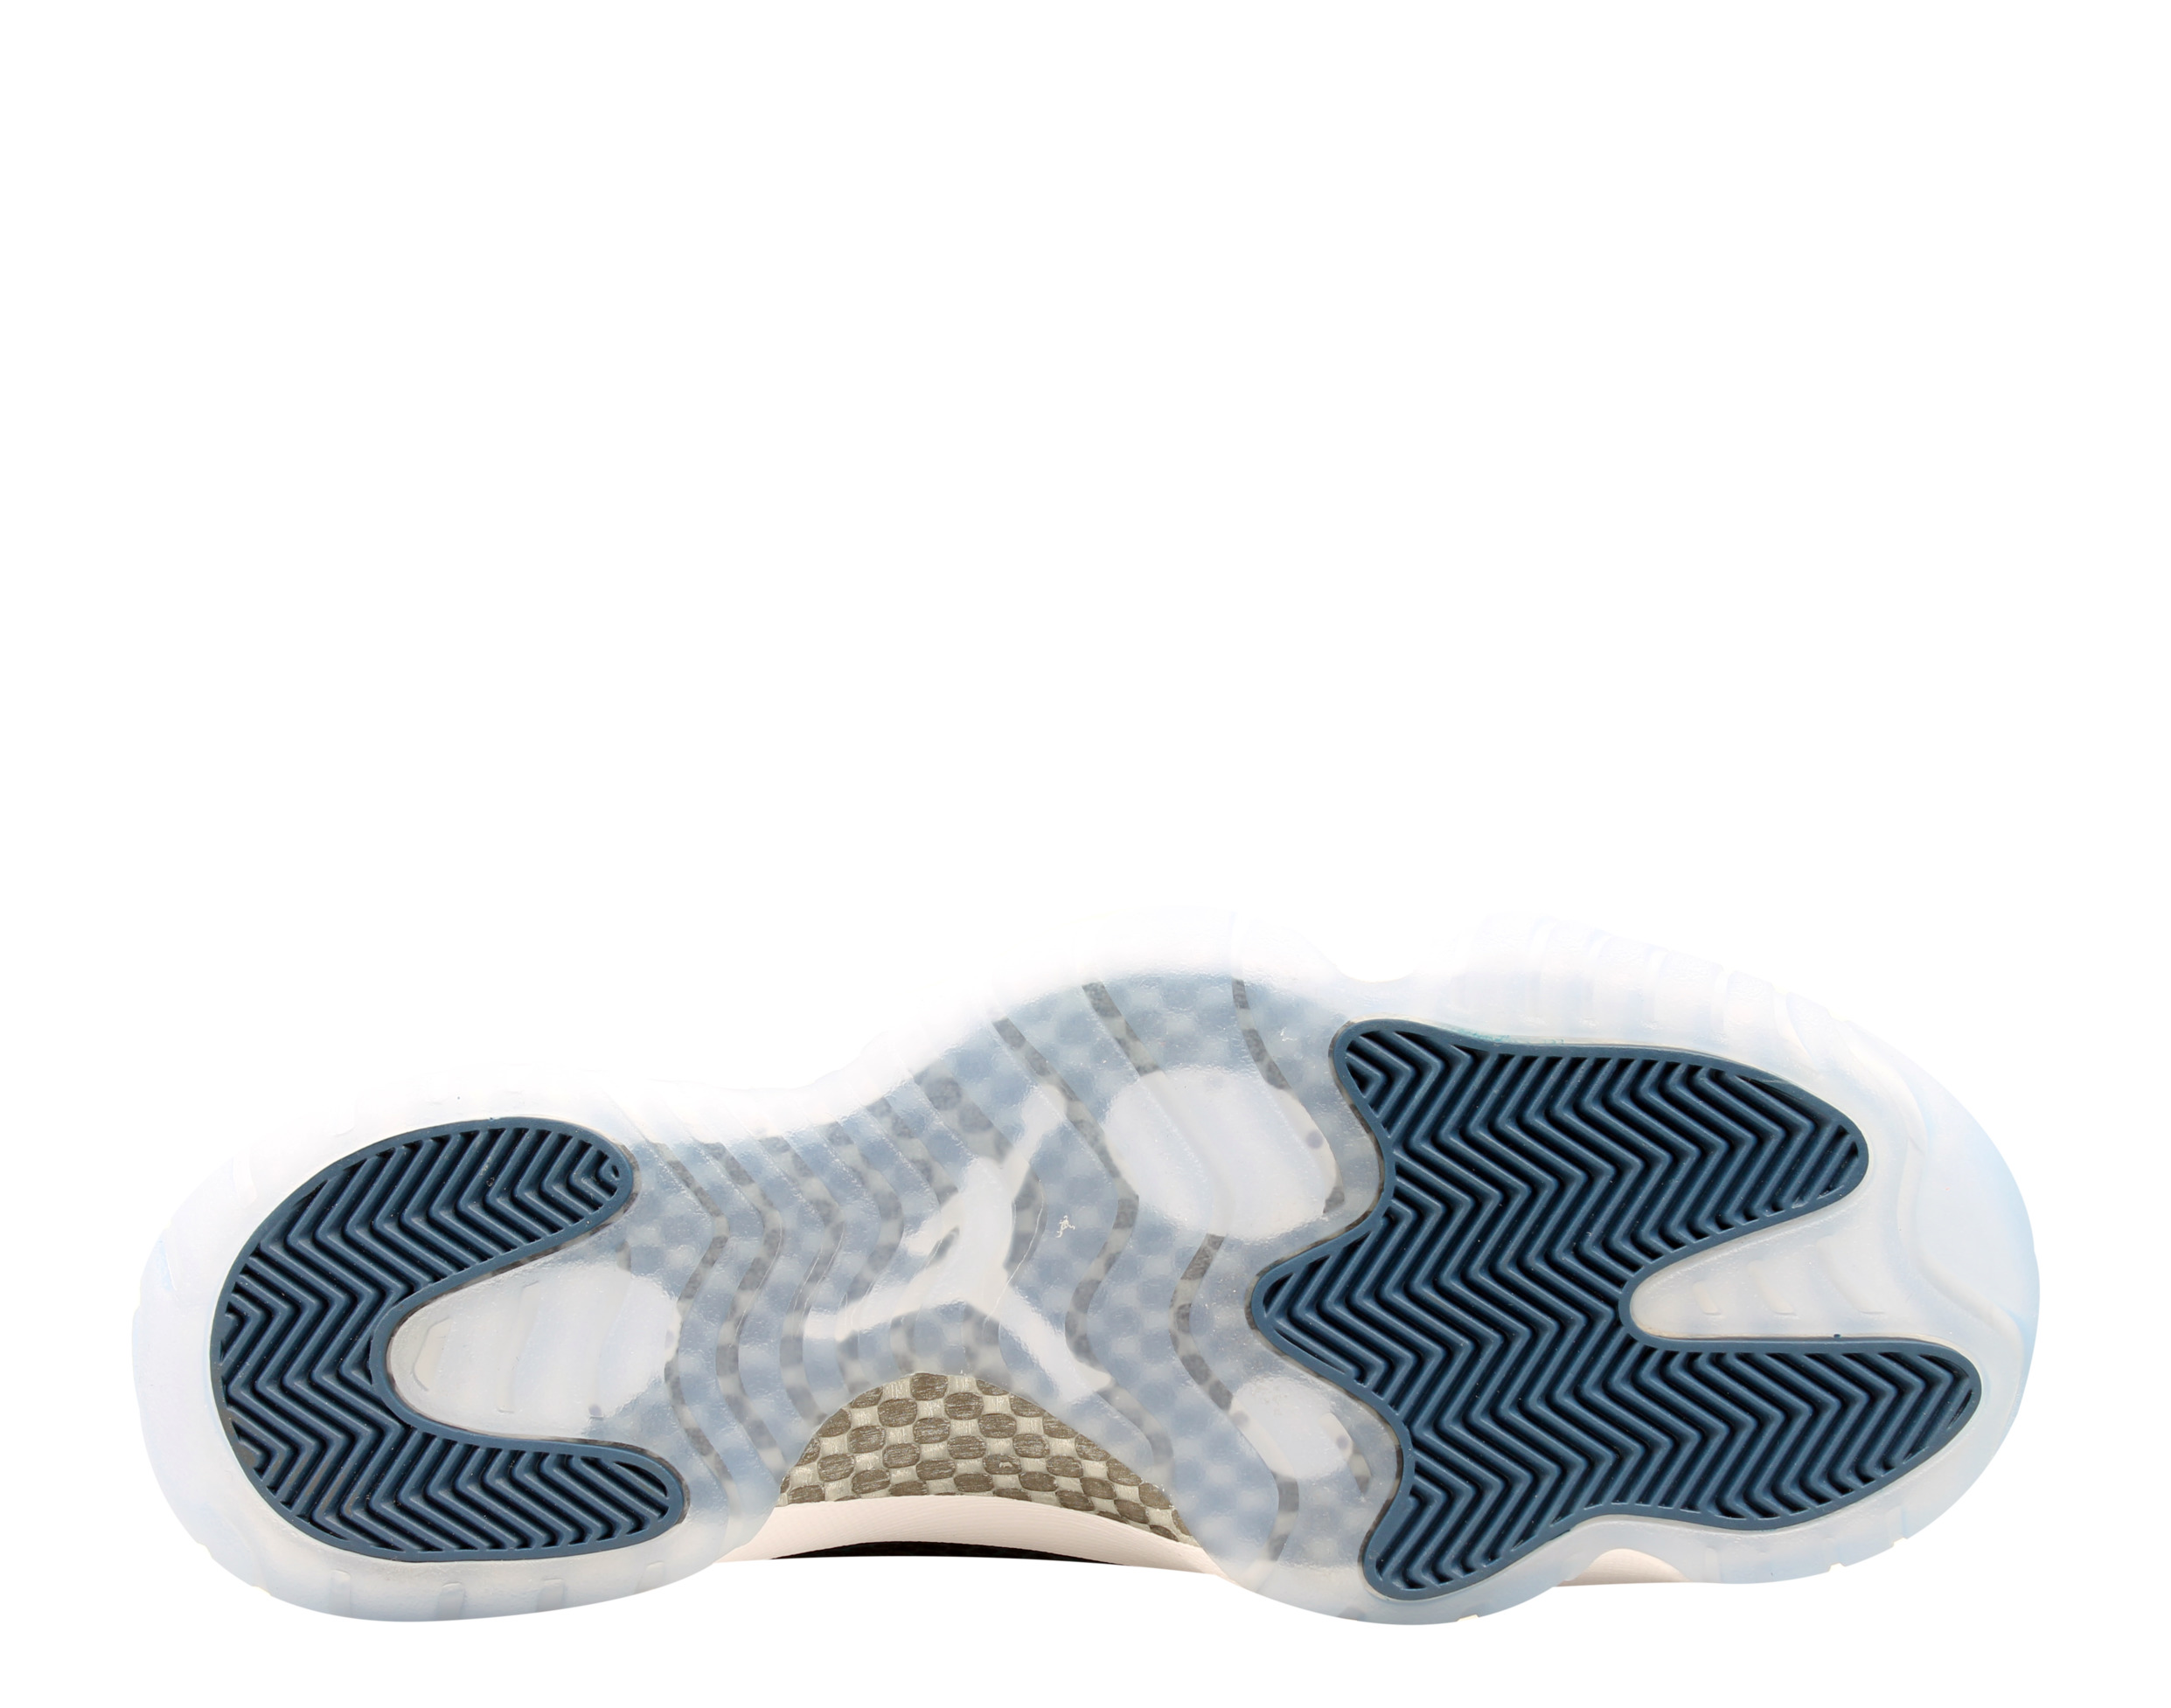 Nike Air Jordan 11 Retro Low LE Men's Basketball Shoes Size 14 - image 5 of 6